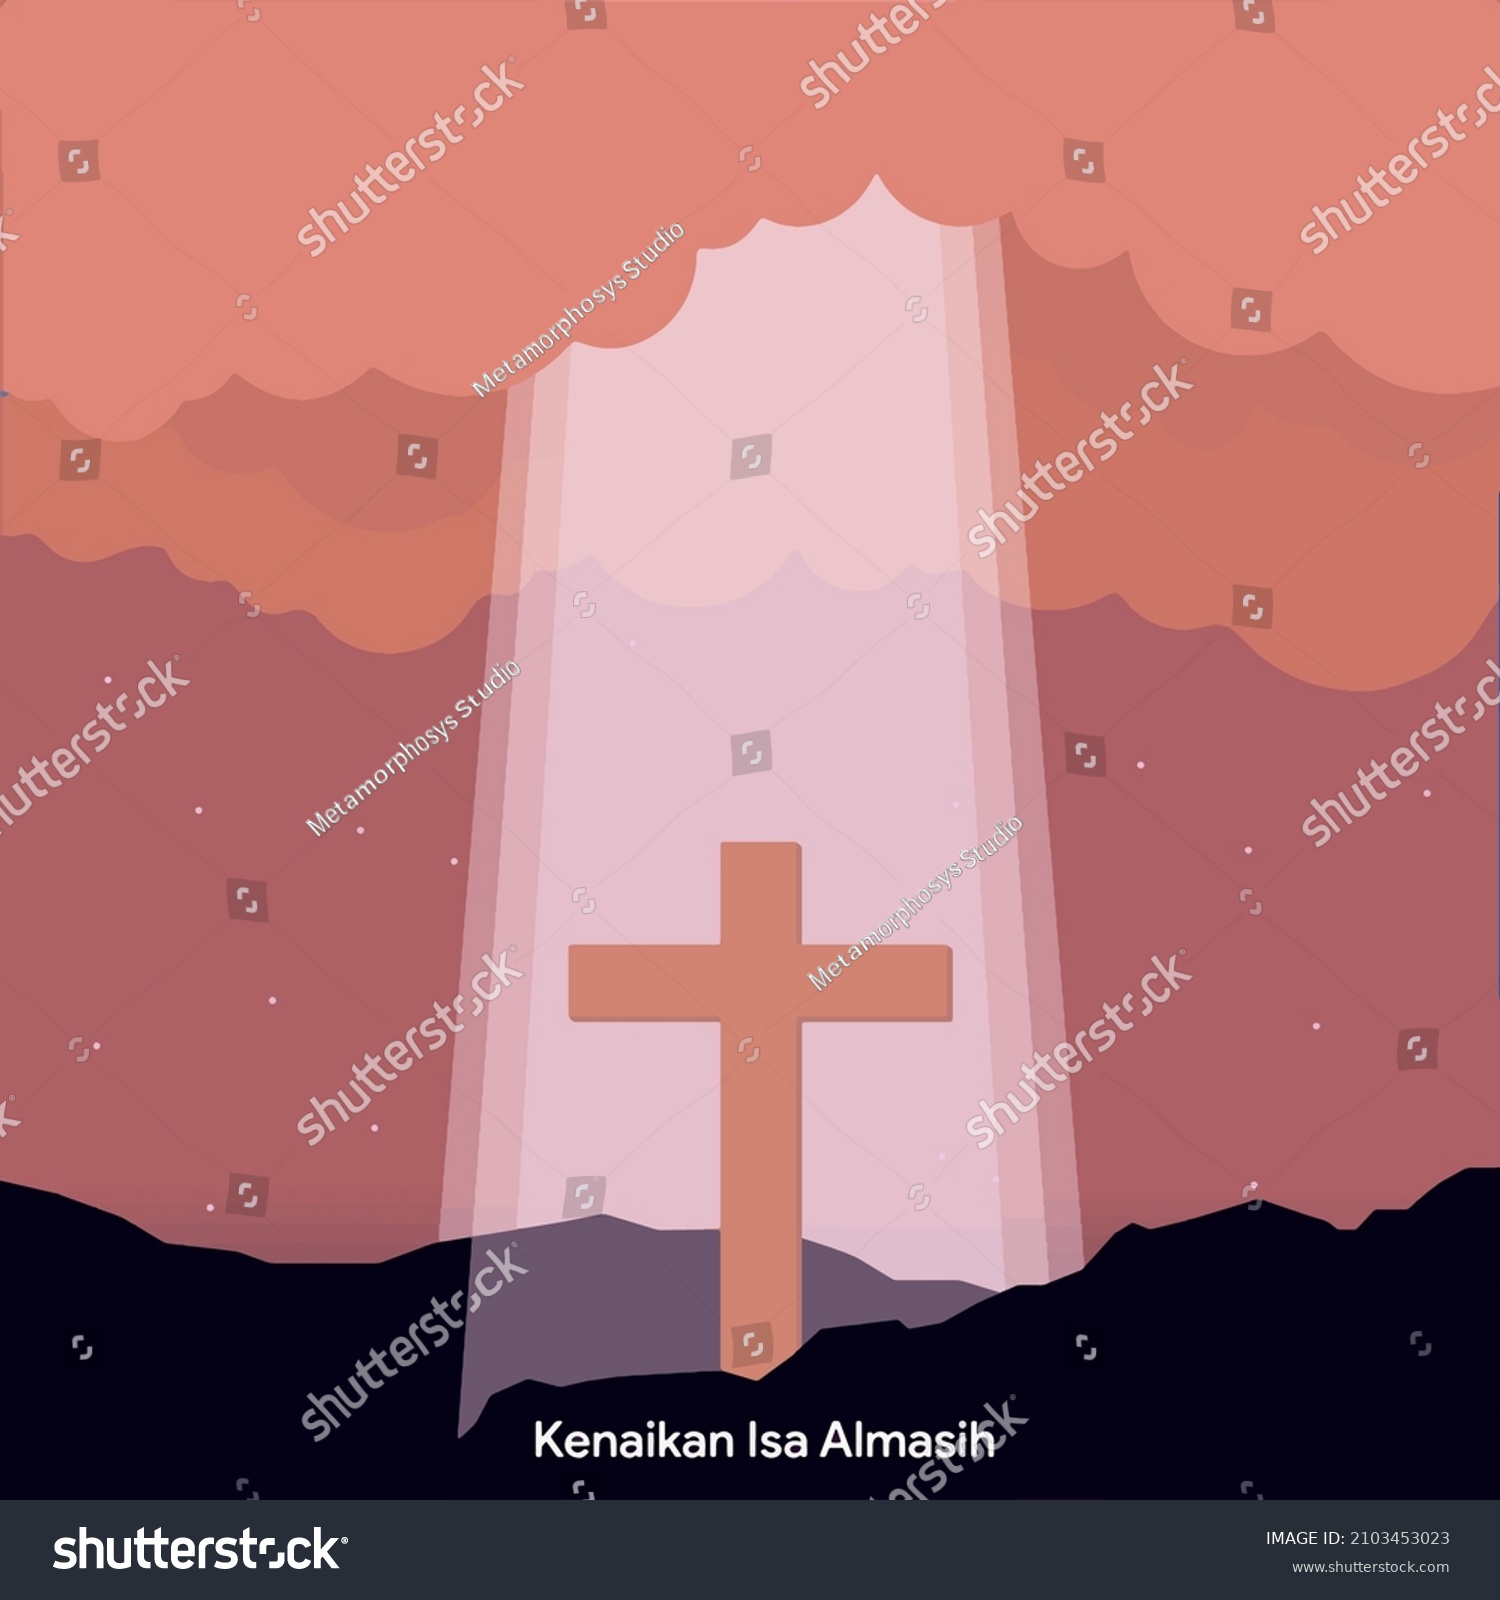 SVG of Hari Kenaikan Isa Almasih (Translation: The Ascension of Jesus Christ) svg